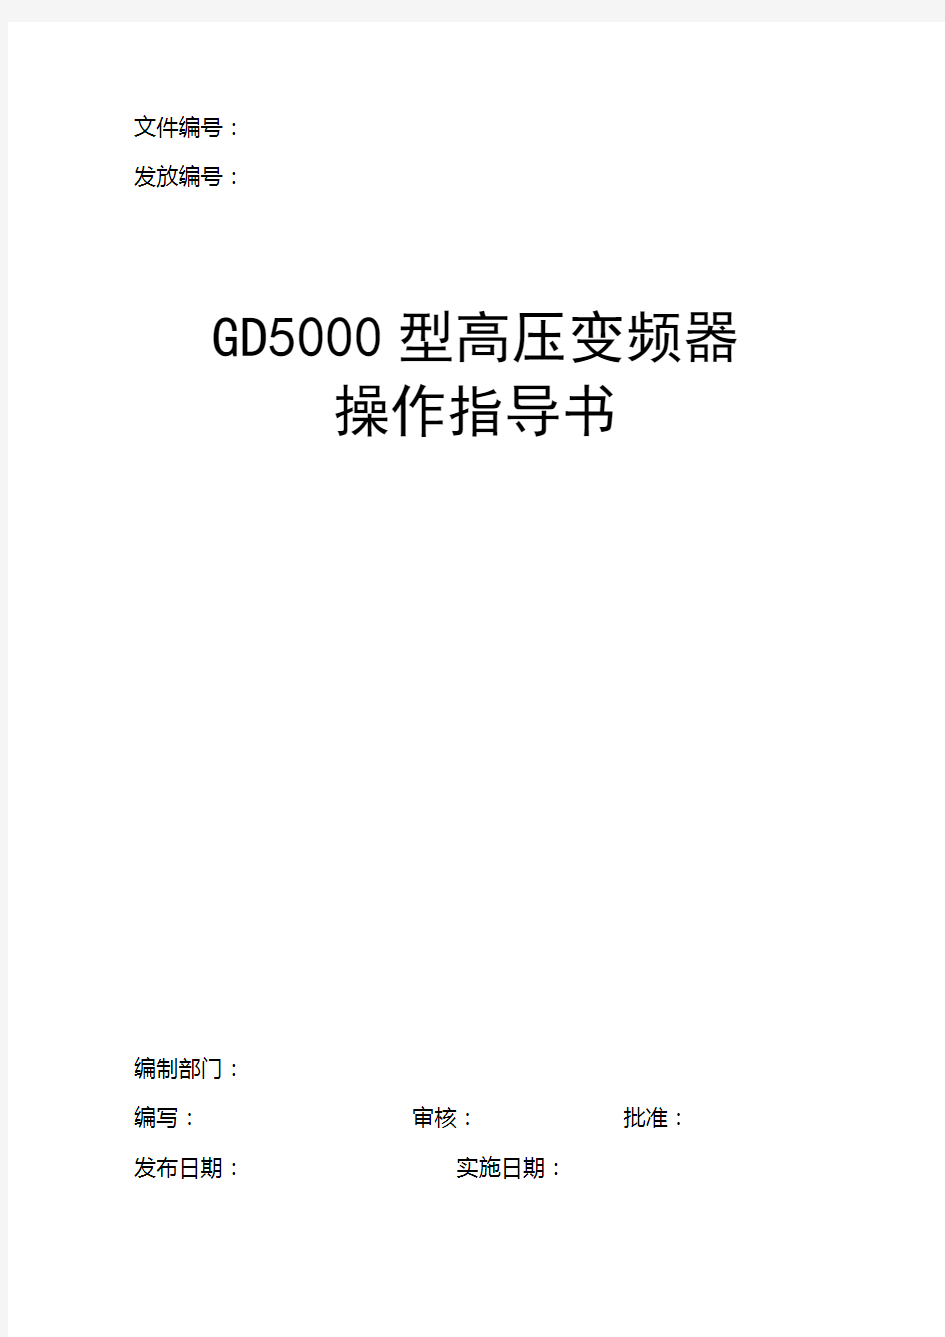 GD5000型高压变频器操作指导书